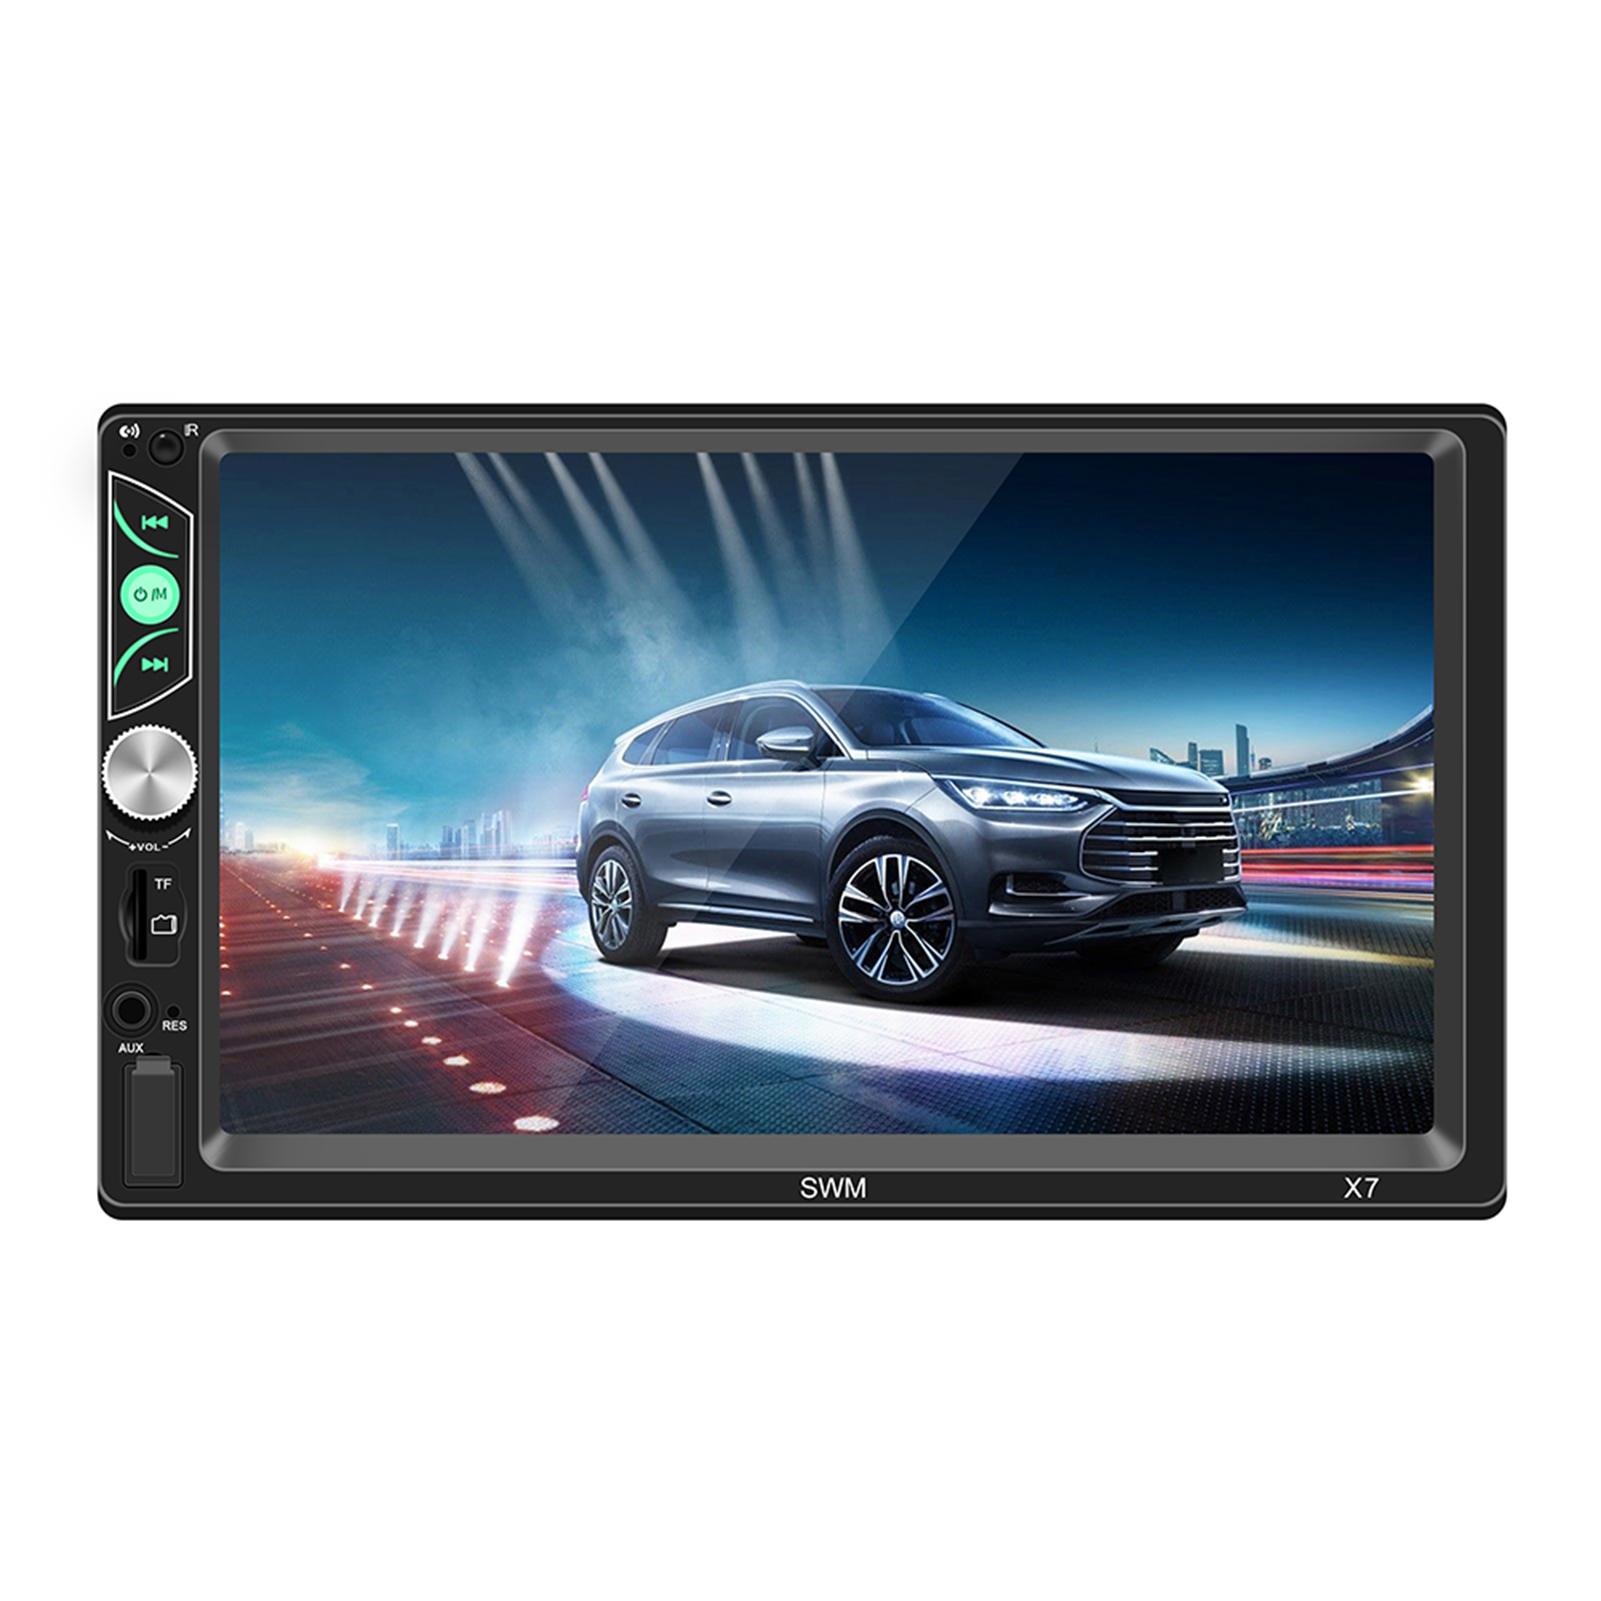 Auto Video Spelers 1024X600P High Definition 7-Inch Bluetooth 4.0 Handsfree Car Audio Video MP4 MP5 Speler Auto MP5 Speler